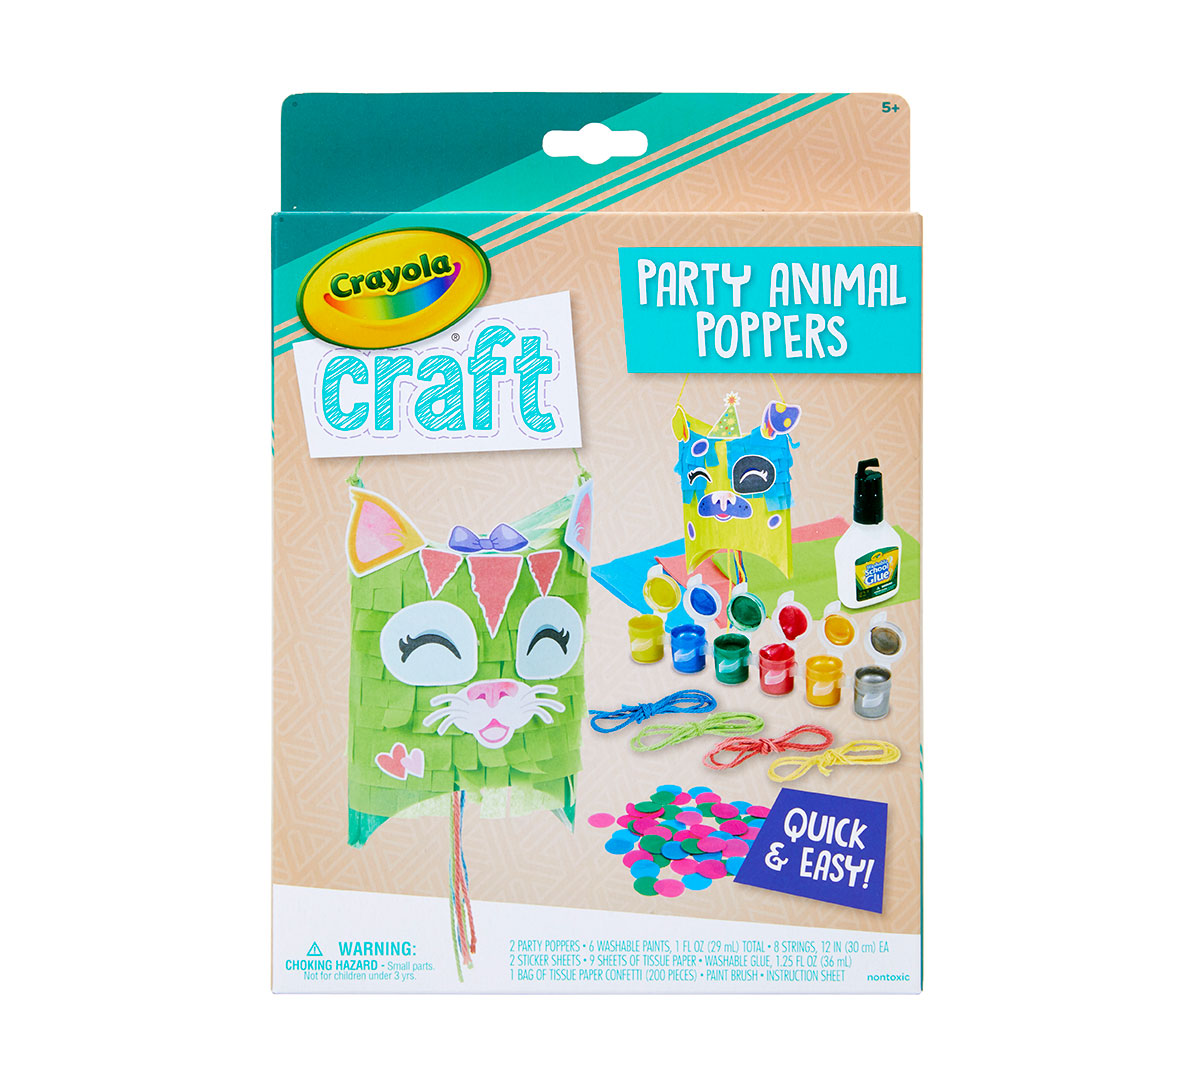 Diplomaat Bekritiseren zeevruchten Crayola Craft Confetti Party Poppers, Animal Craft for Kids, Gift for Kids,  Ages 5, 6, 7, 8 | Crayola